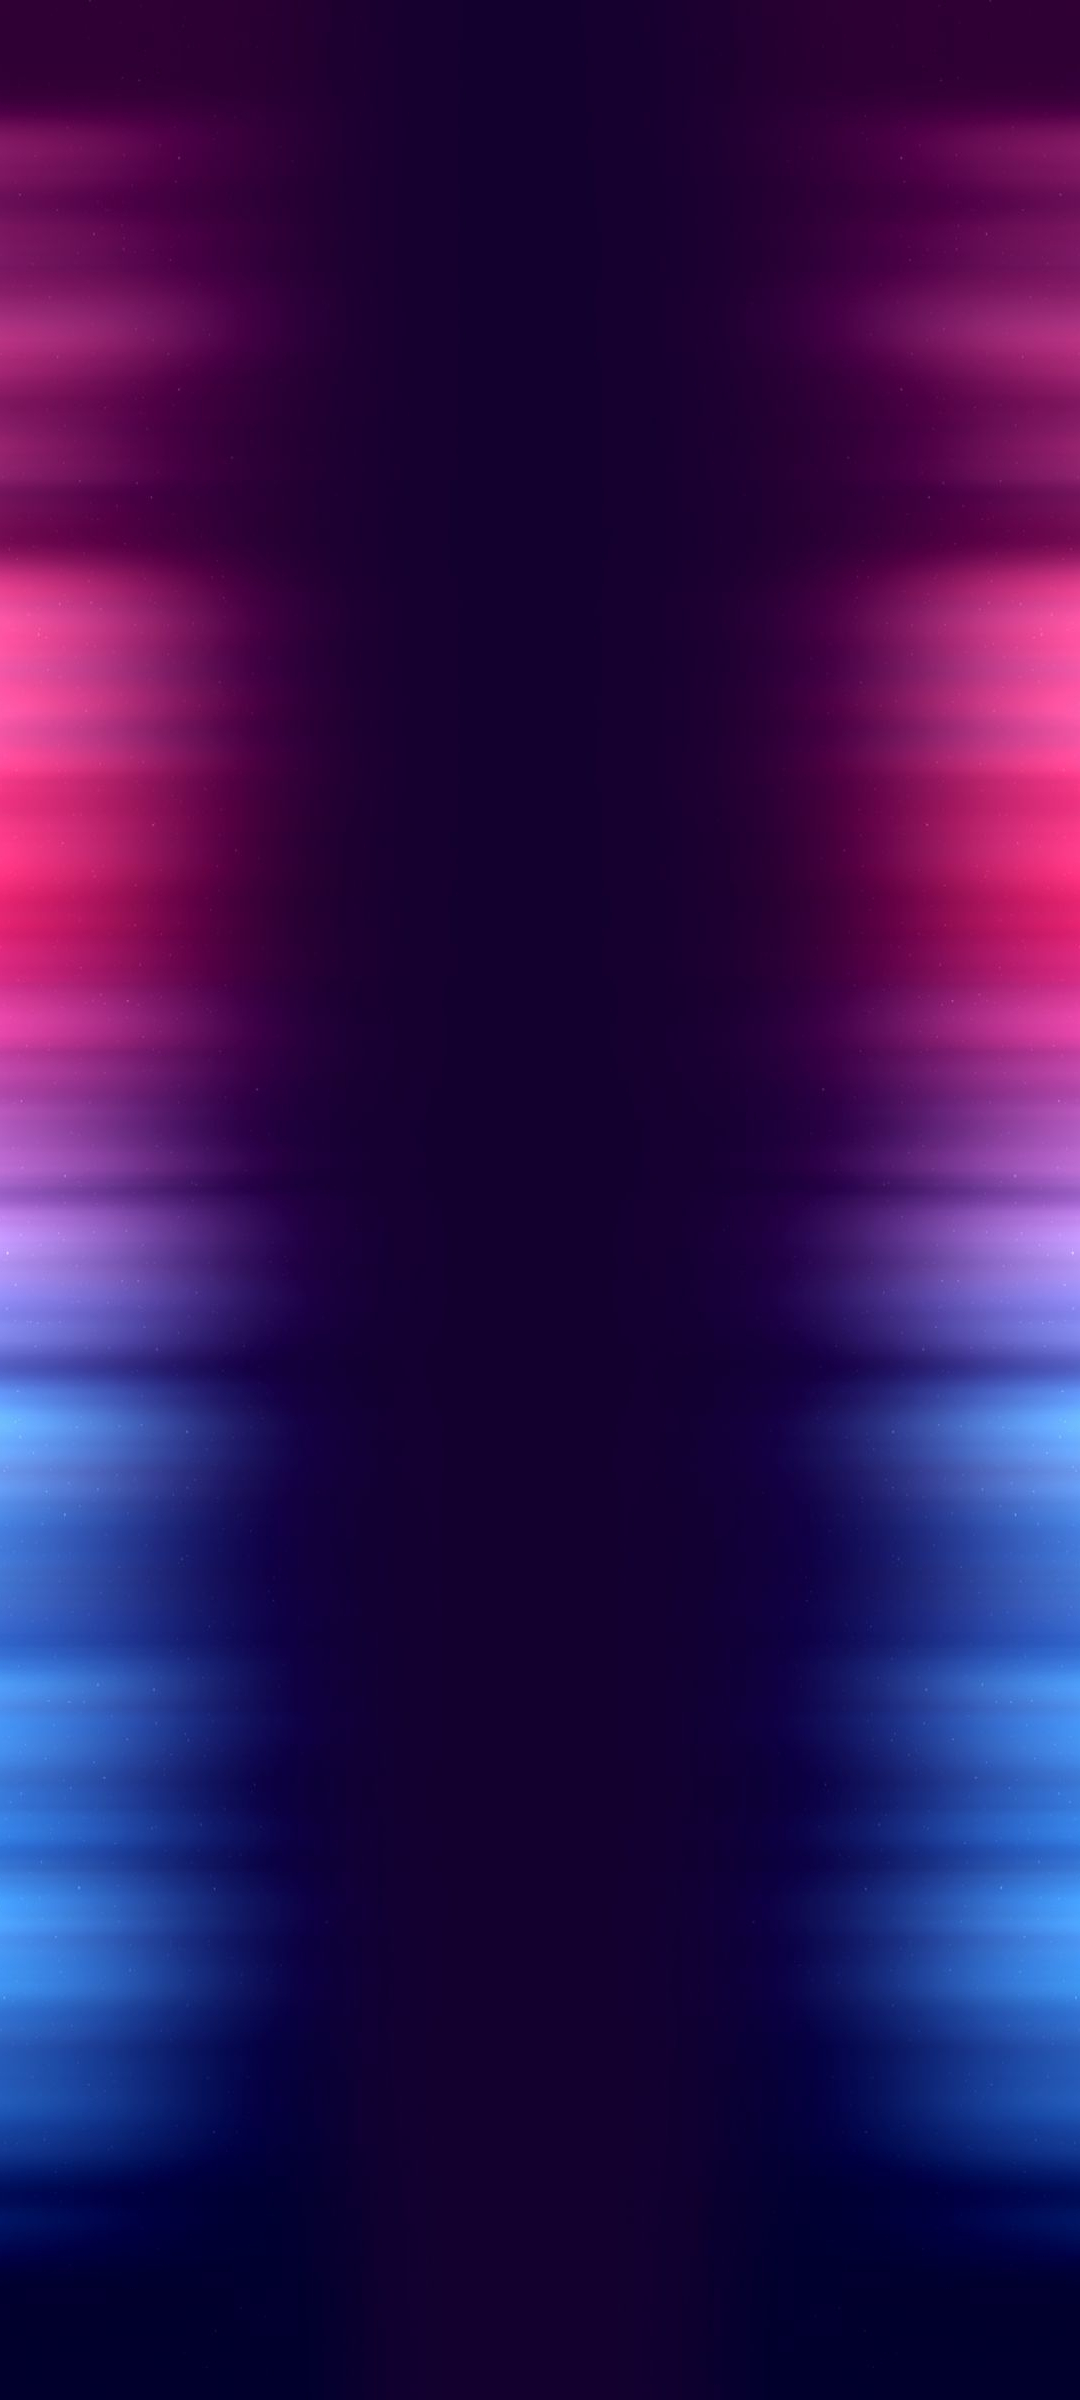 1080x2400 Border Neon Colors Wallpaper 24